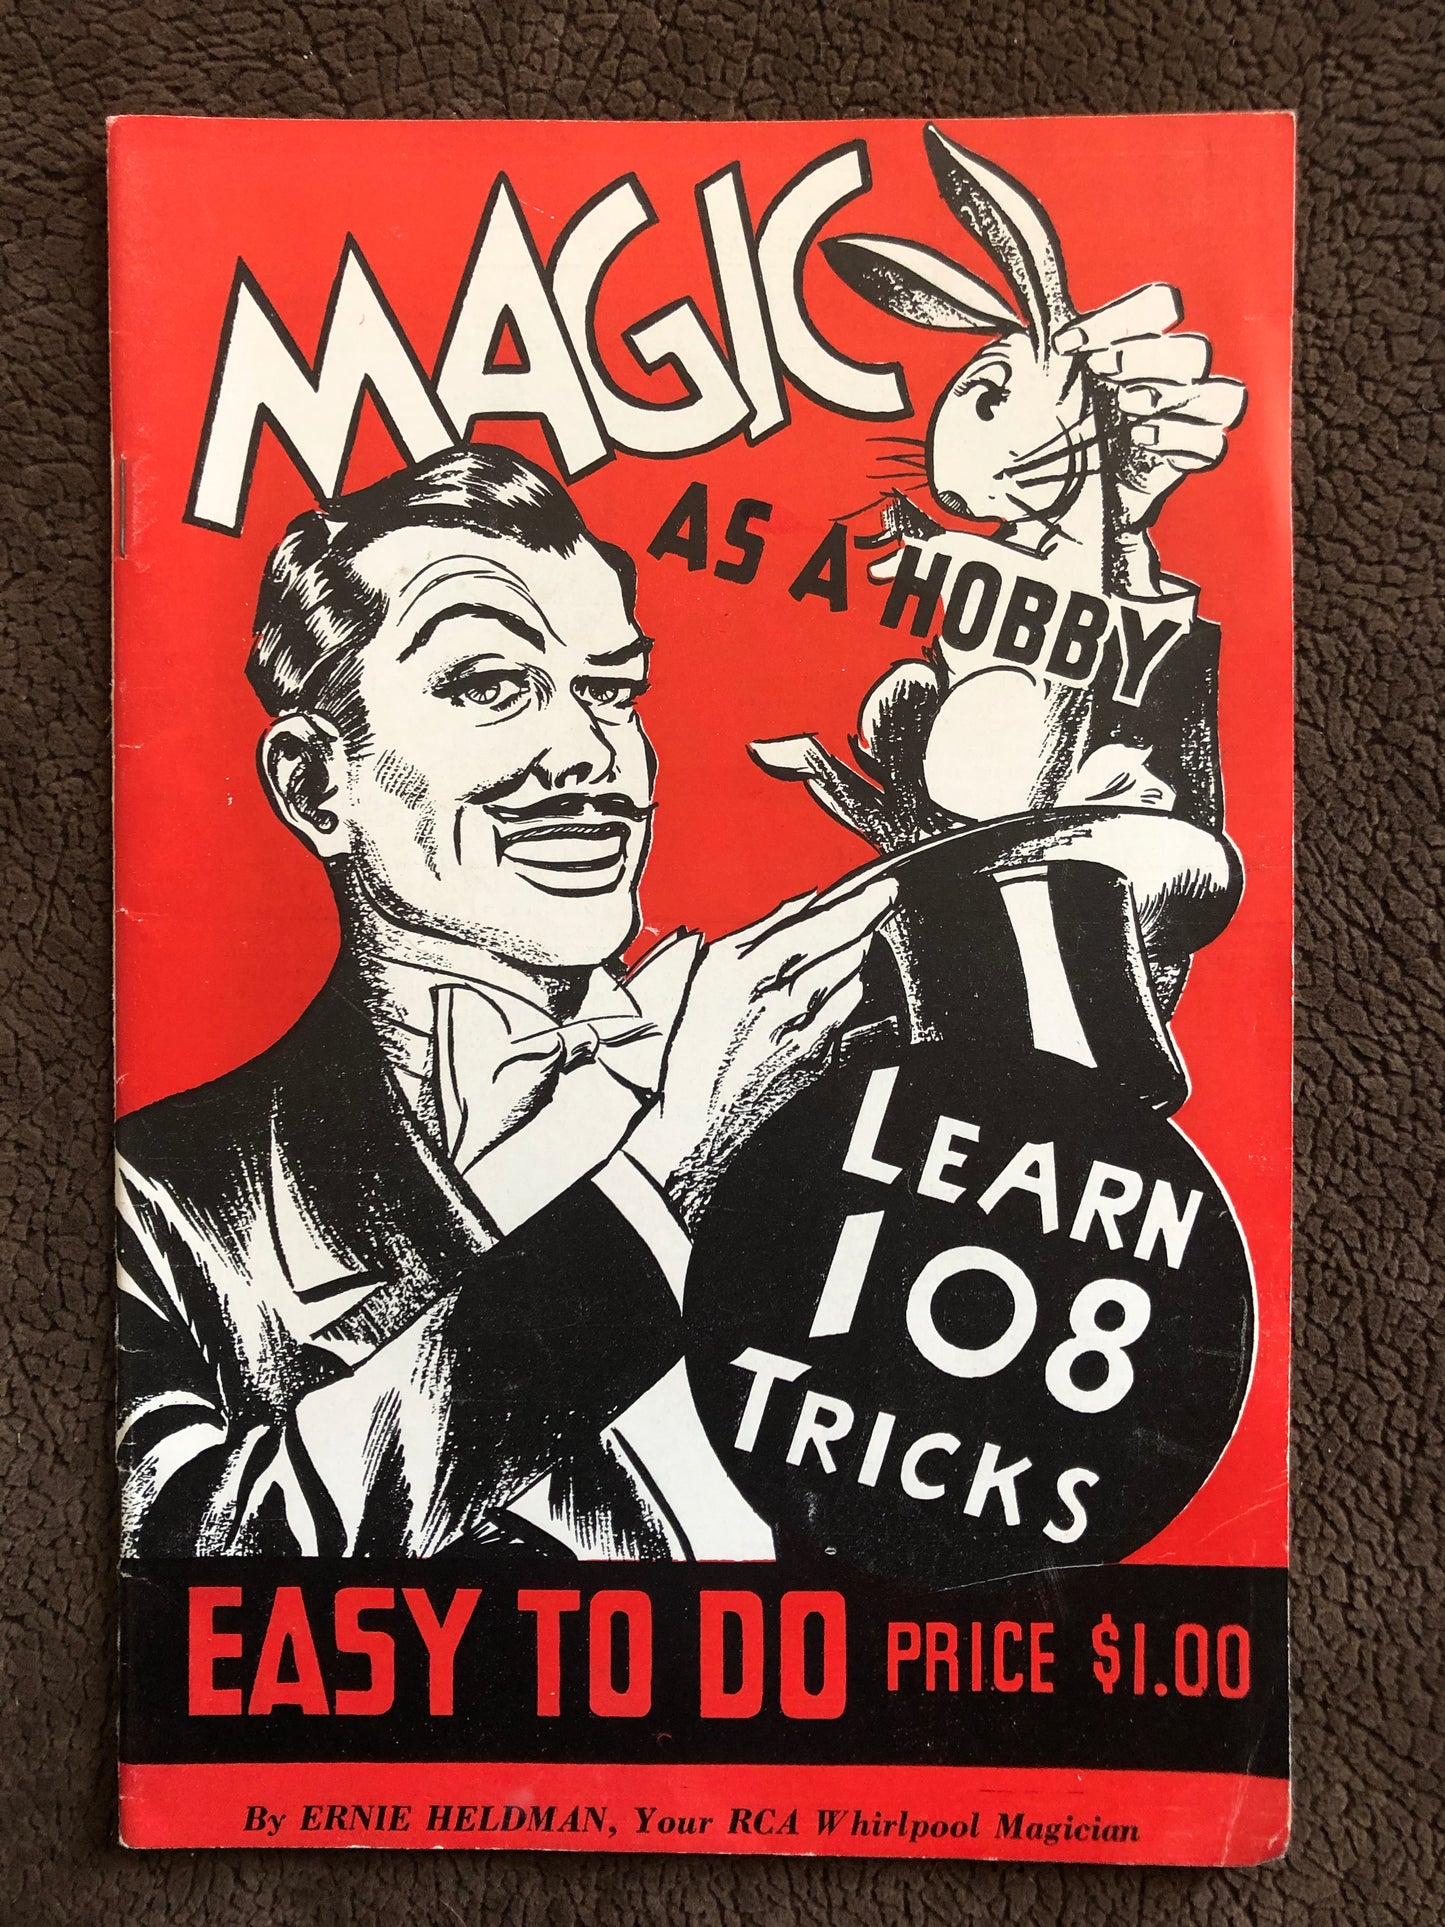 Magic As A Hobby: Learn 108 Tricks - Robert Nelson